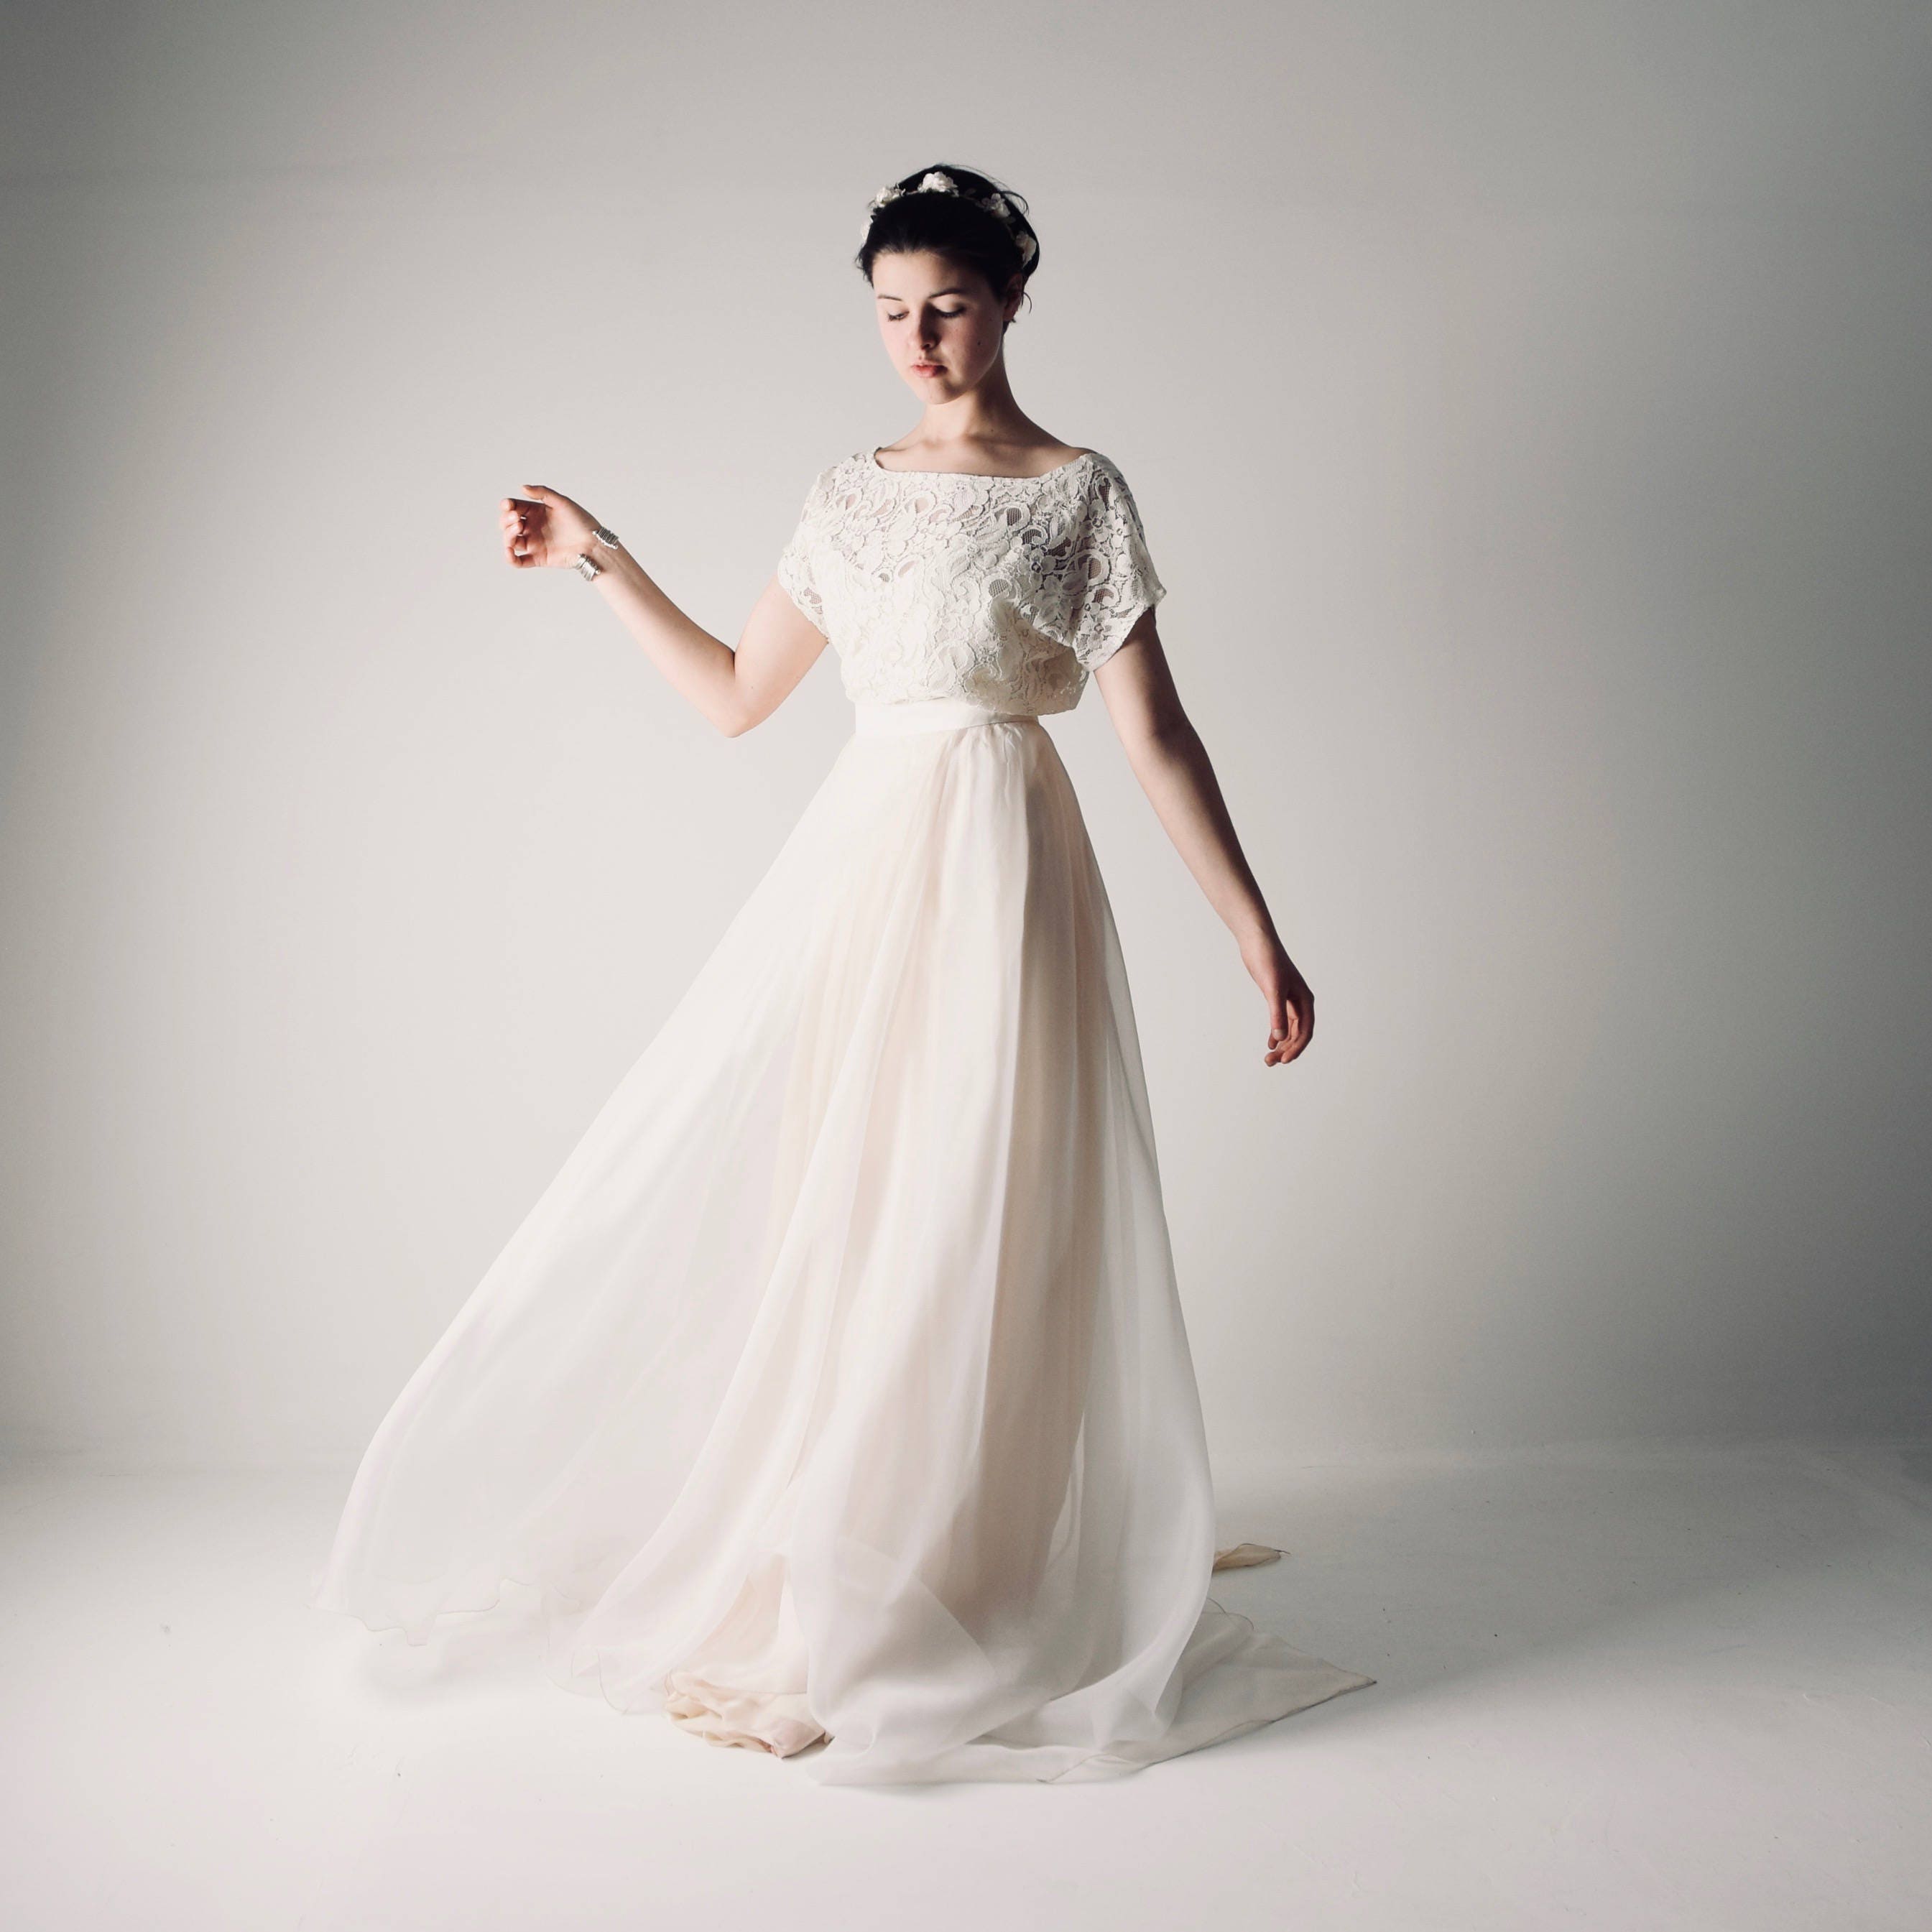 Lace Wedding Dress Bohemian Wedding Dress Wedding Dress | Etsy